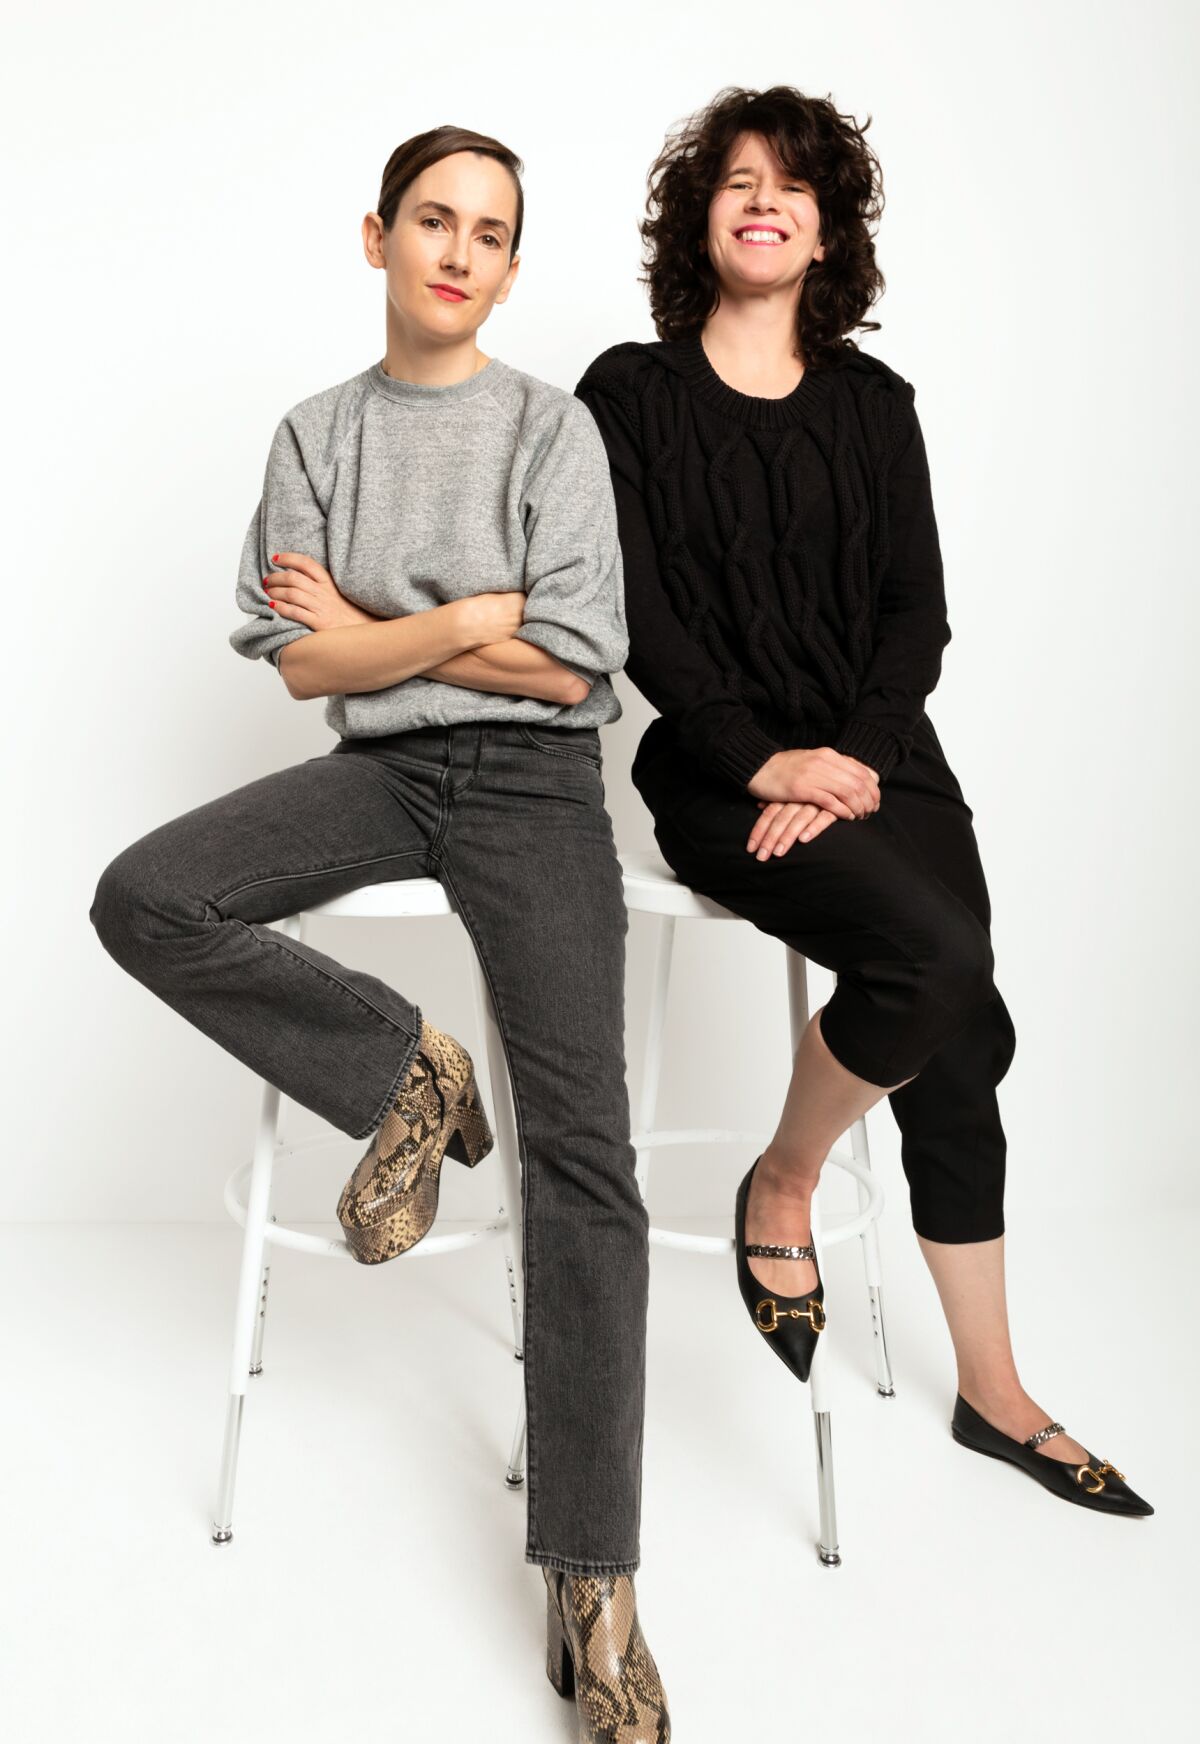 Celebrity stylist Karla Welch and marketing expert Sasha Markova.